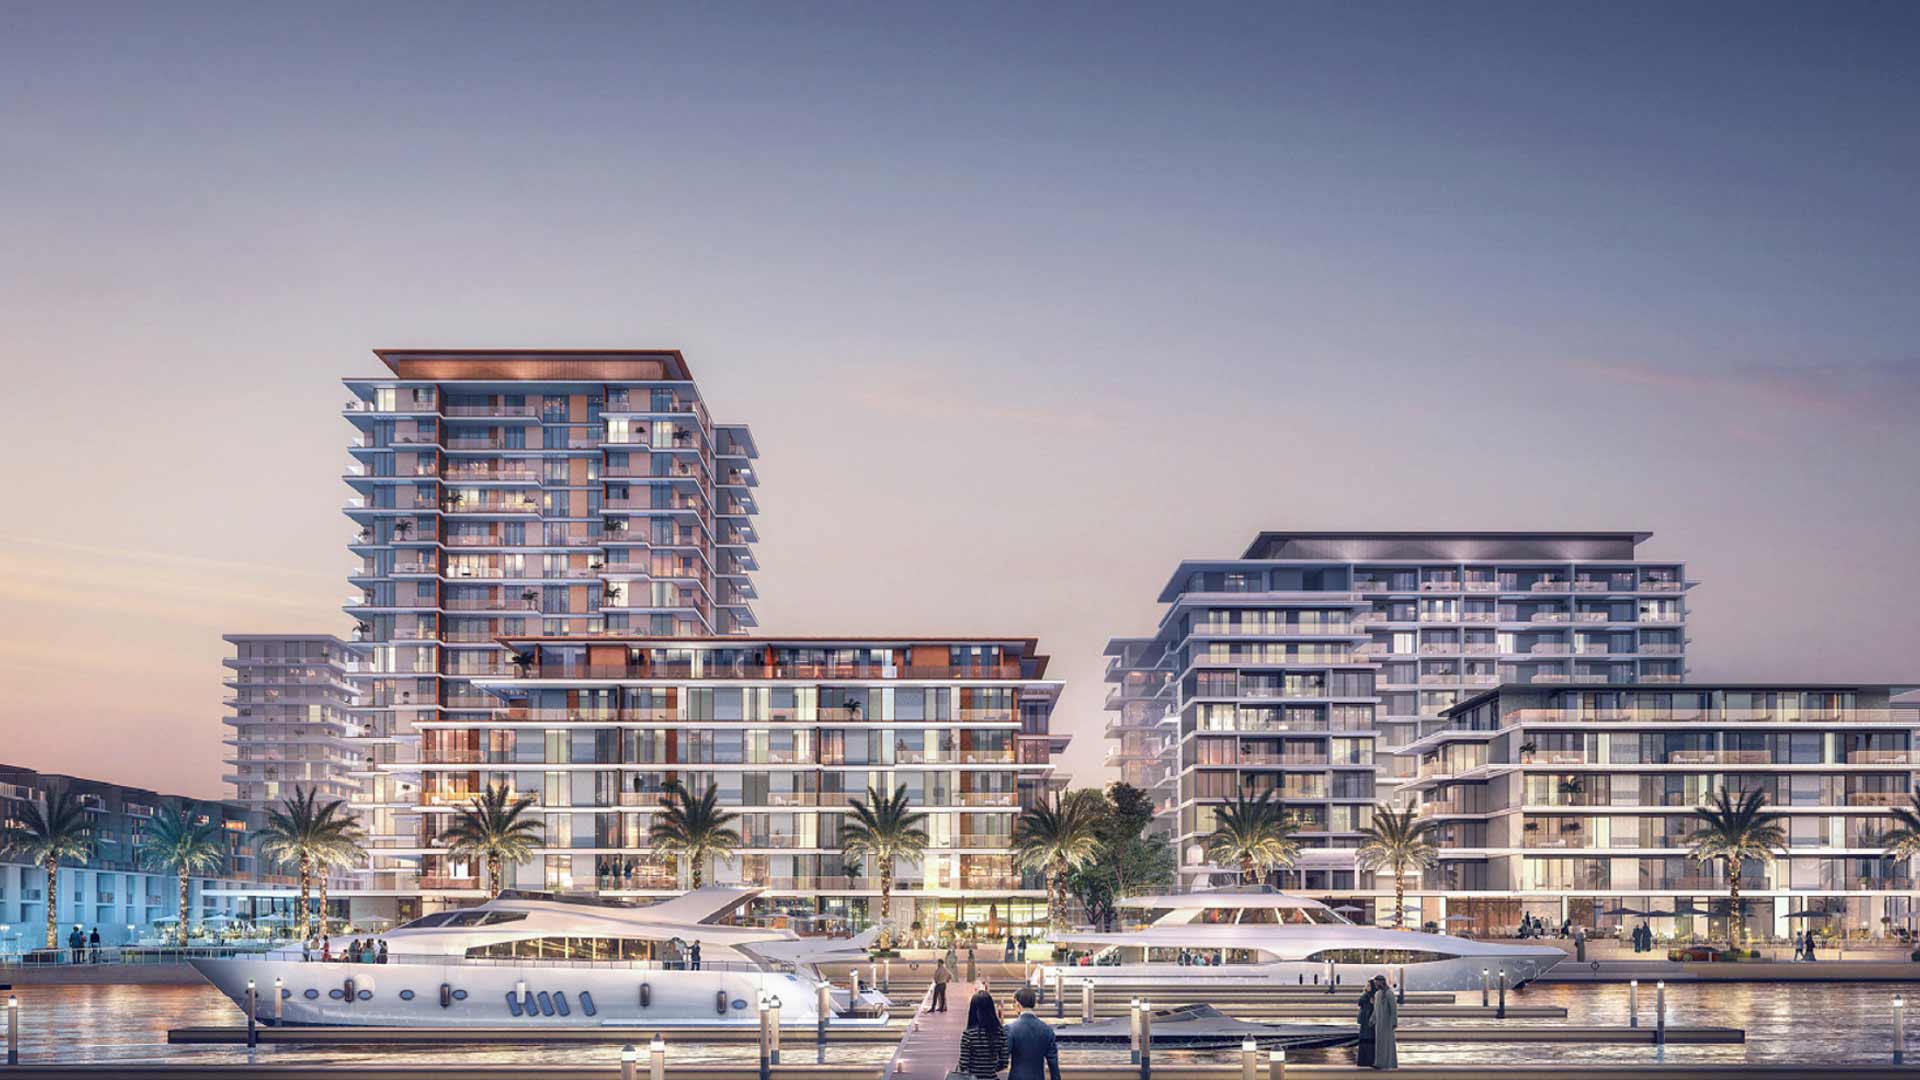 SEAGATE by Emaar Properties in Mina Rashid (Port Rashid), Dubai, UAE